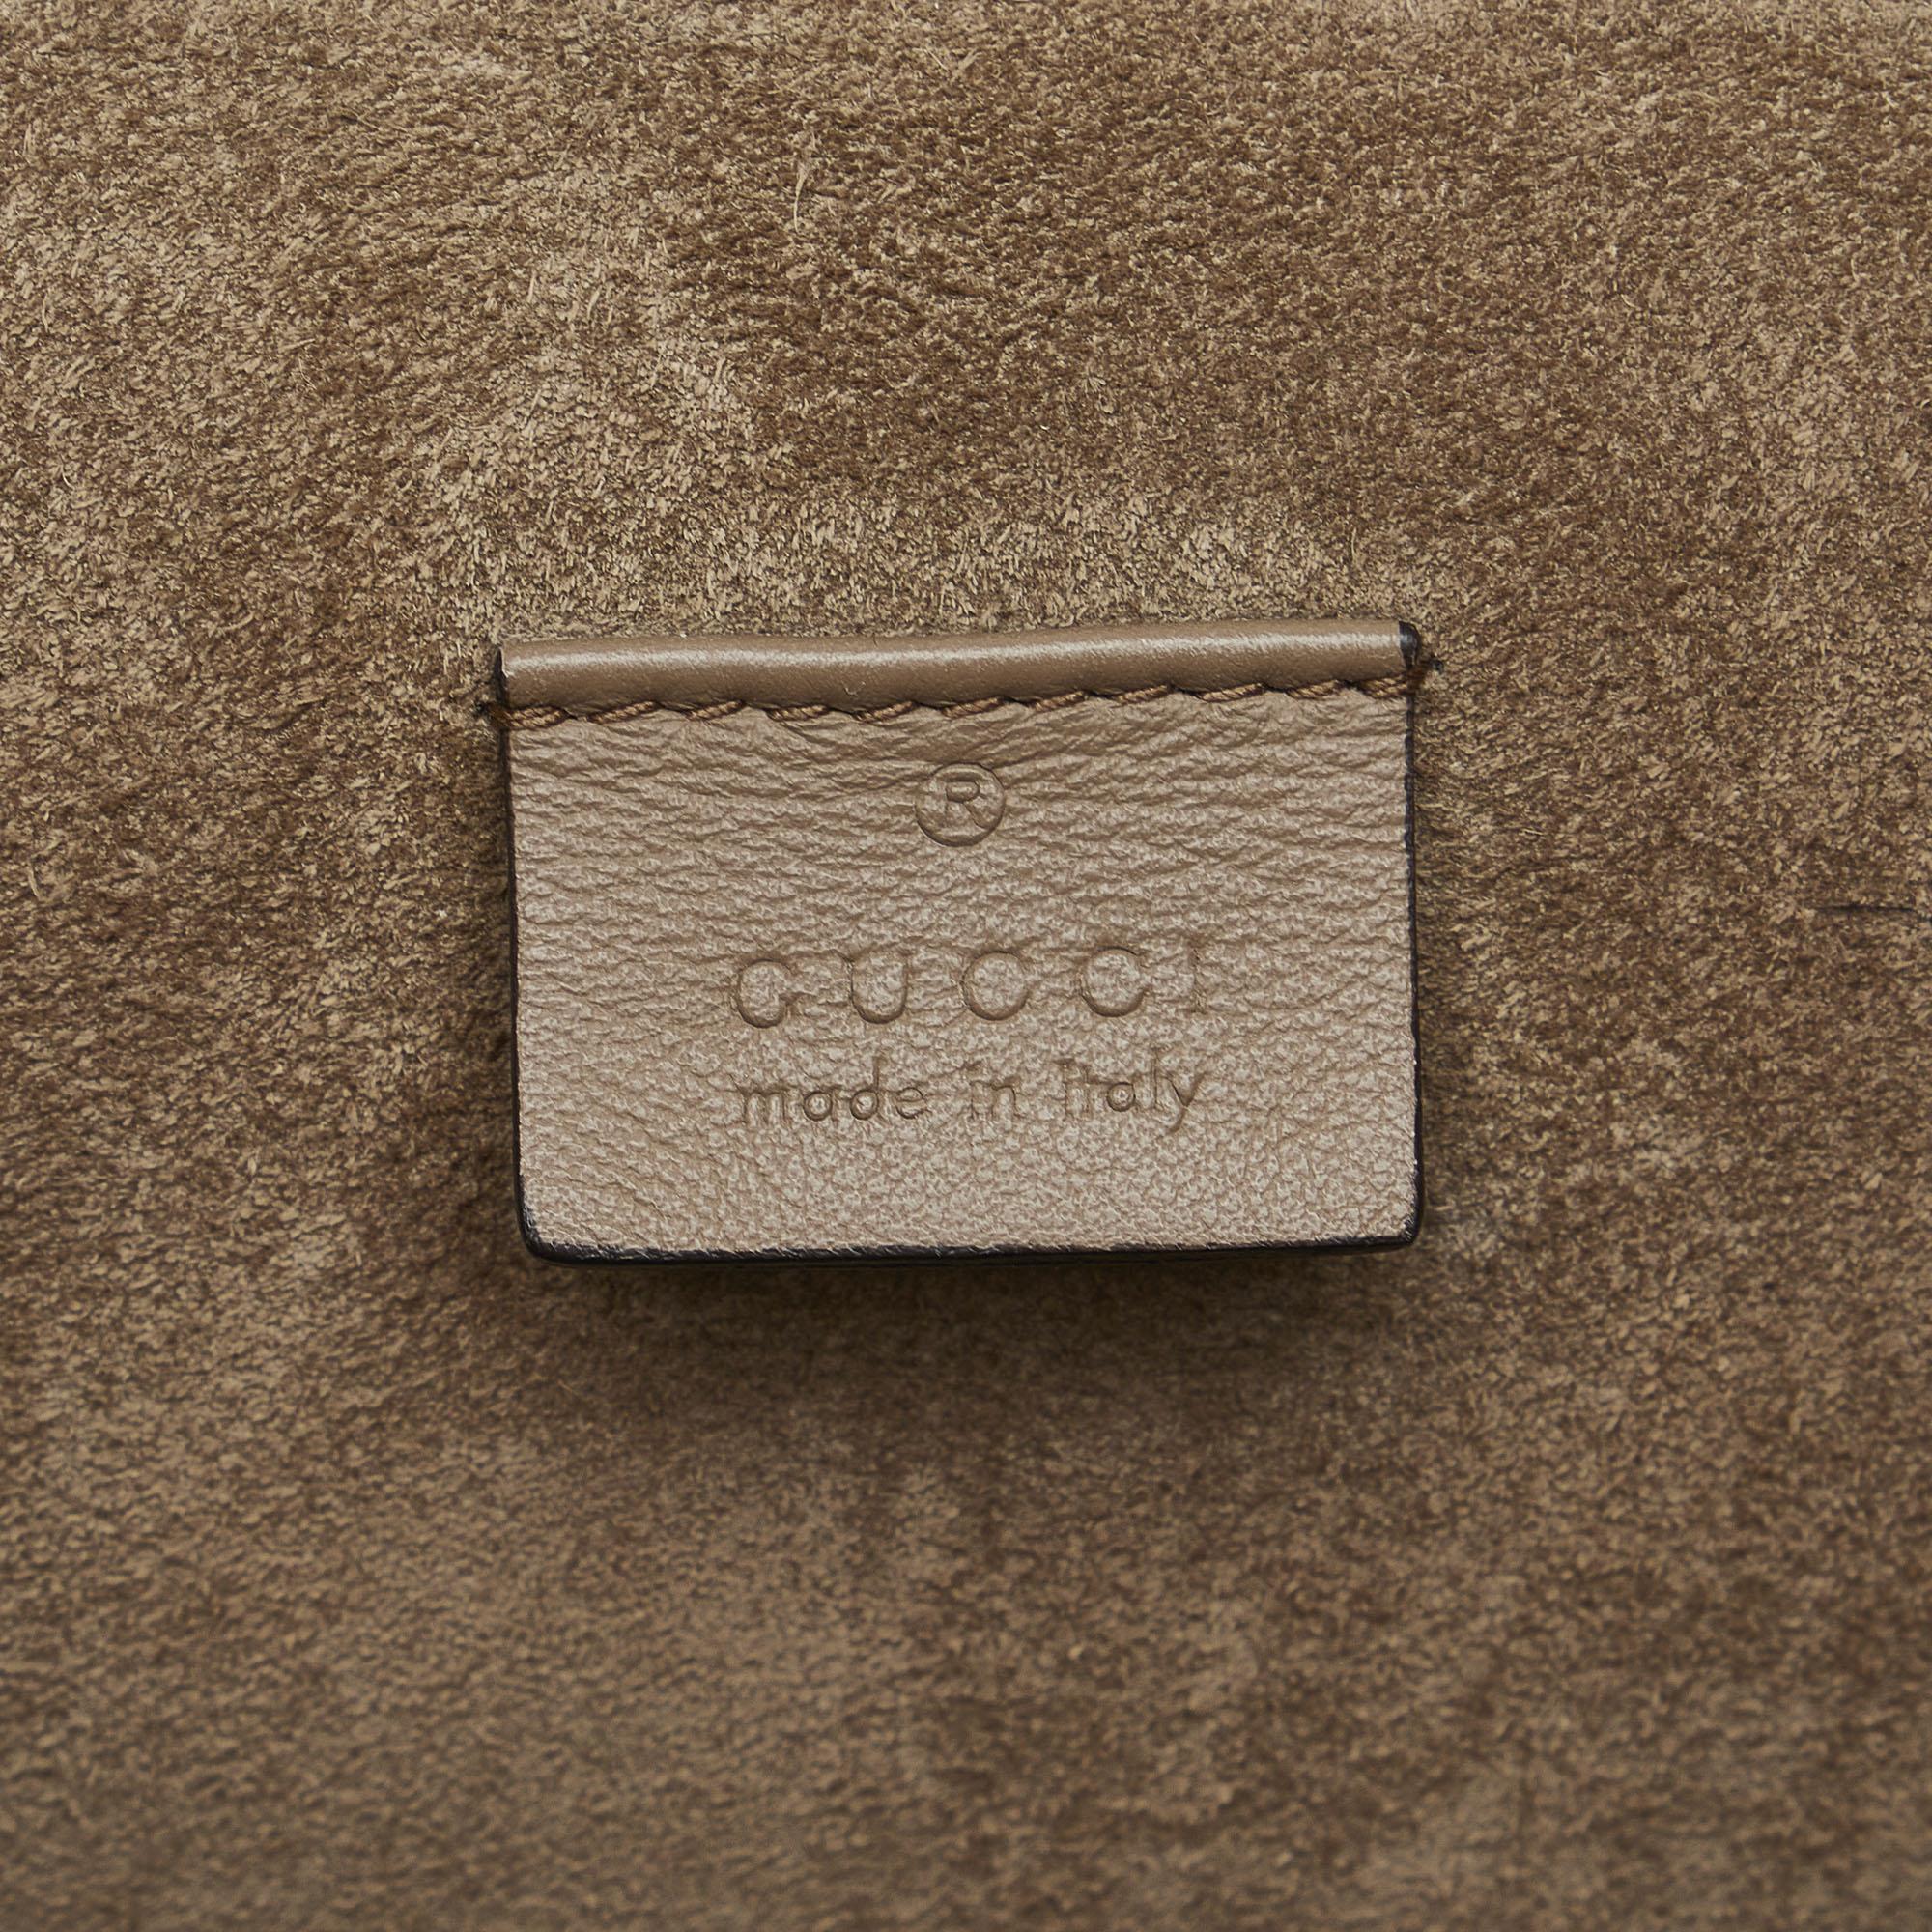 Gucci Multicolour GG Supreme Embroidered Dionysus Shoulder Bag